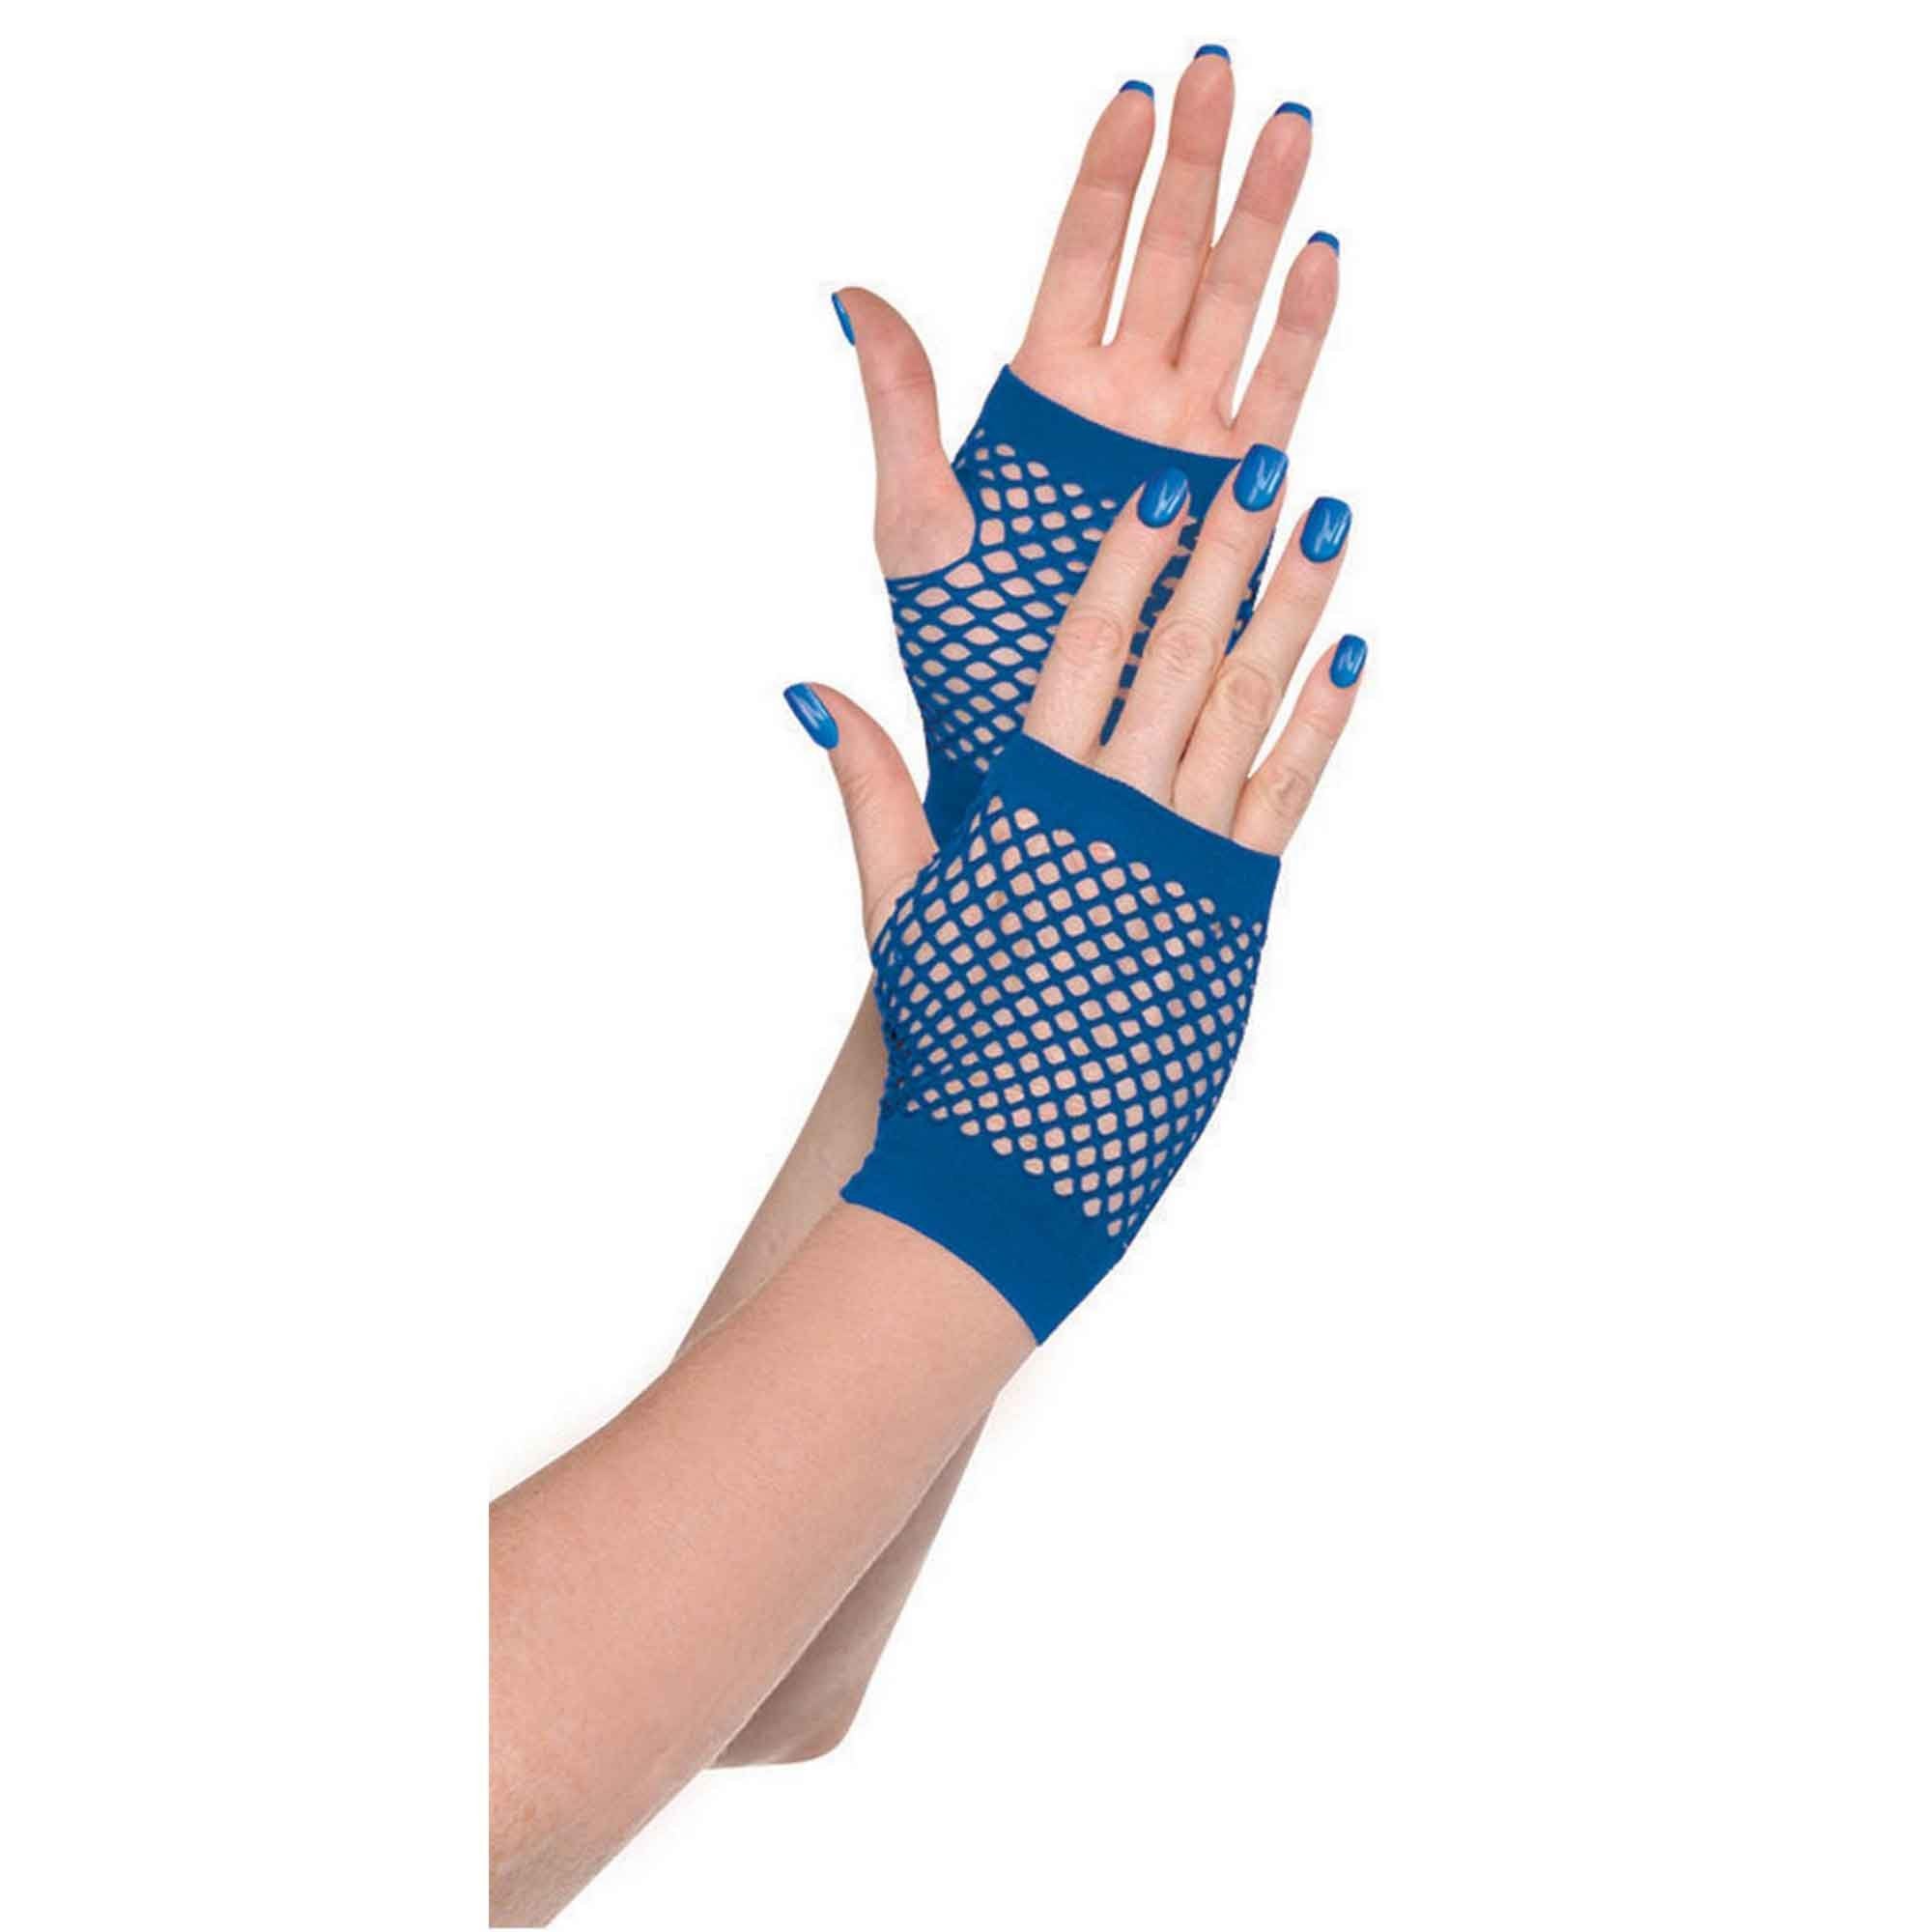 Fishnet Gloves Short - Assorted Colours